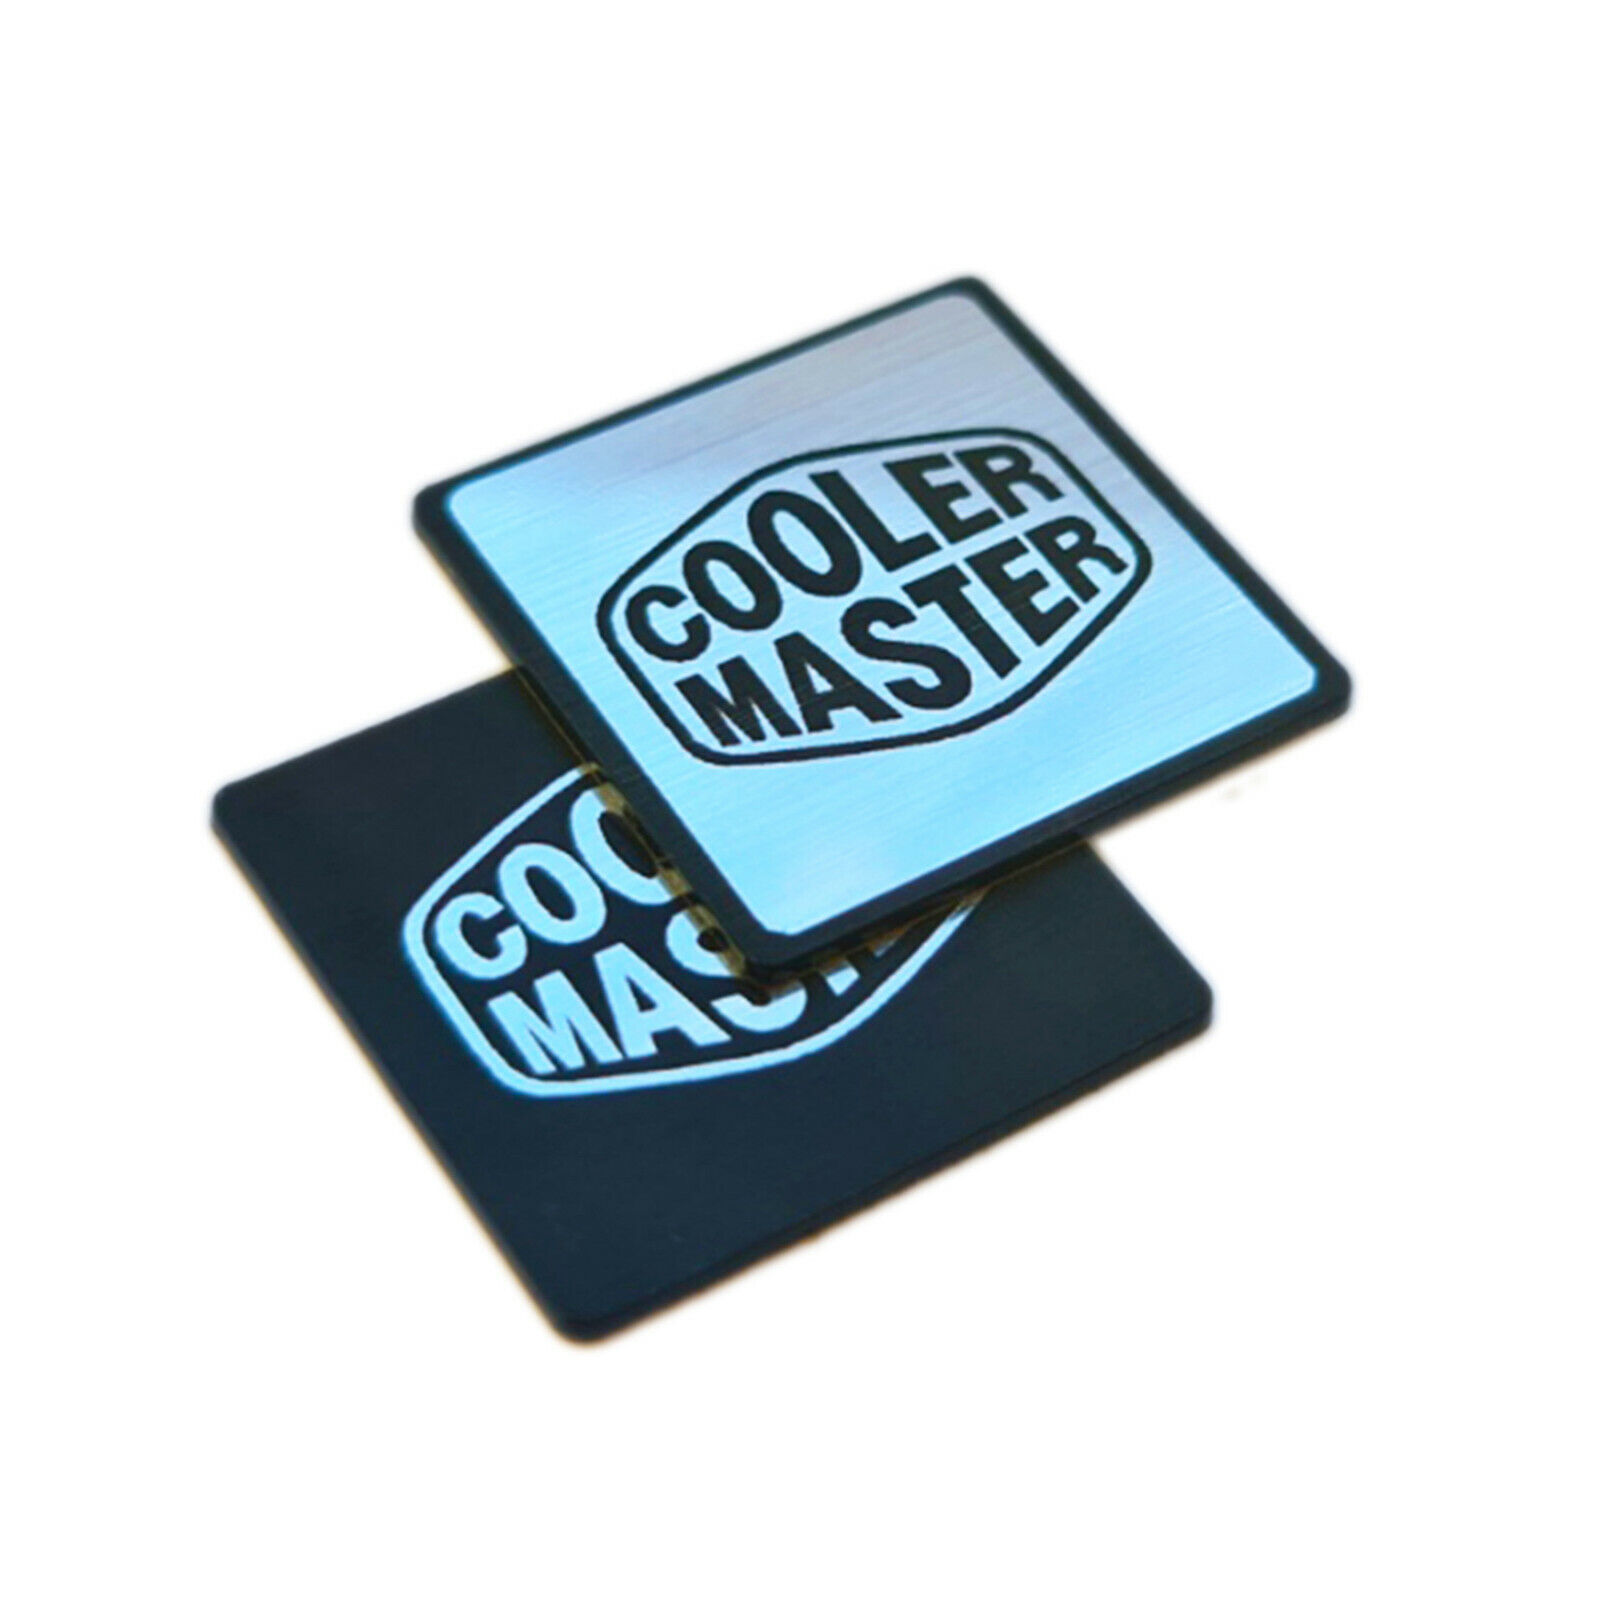 Cooler Master - Sticker Case Badge Aufkleber Decal - TWO Emblems 